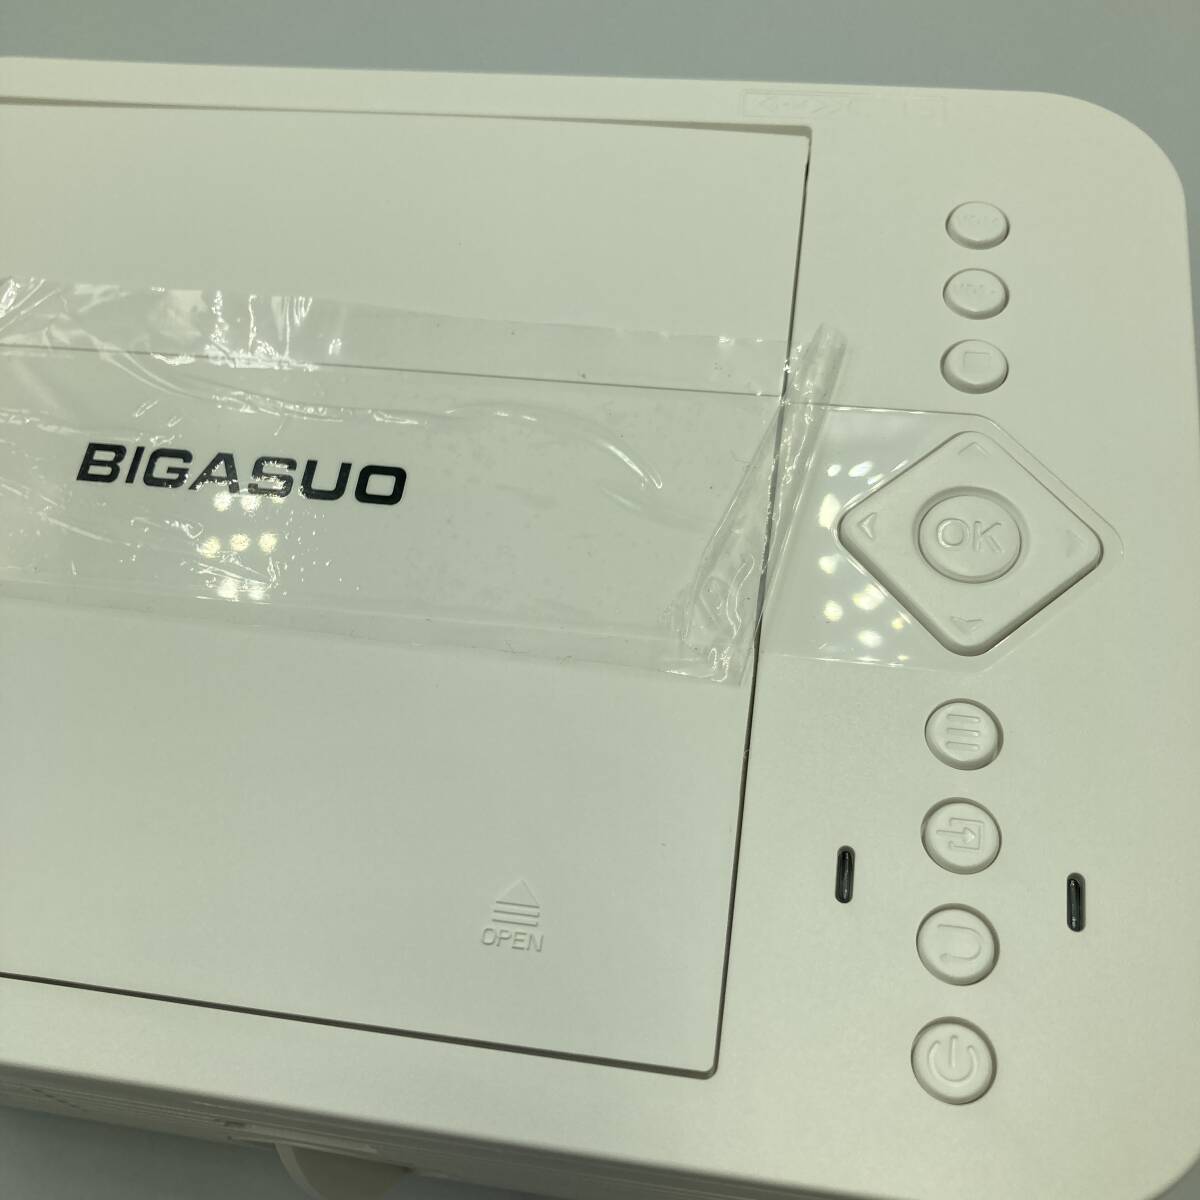 [miniB-CAS card attaching ]BIGASUO B-302TX projector DVD player digital broadcasting TV tuner installing one body home theater /Y16233-T1